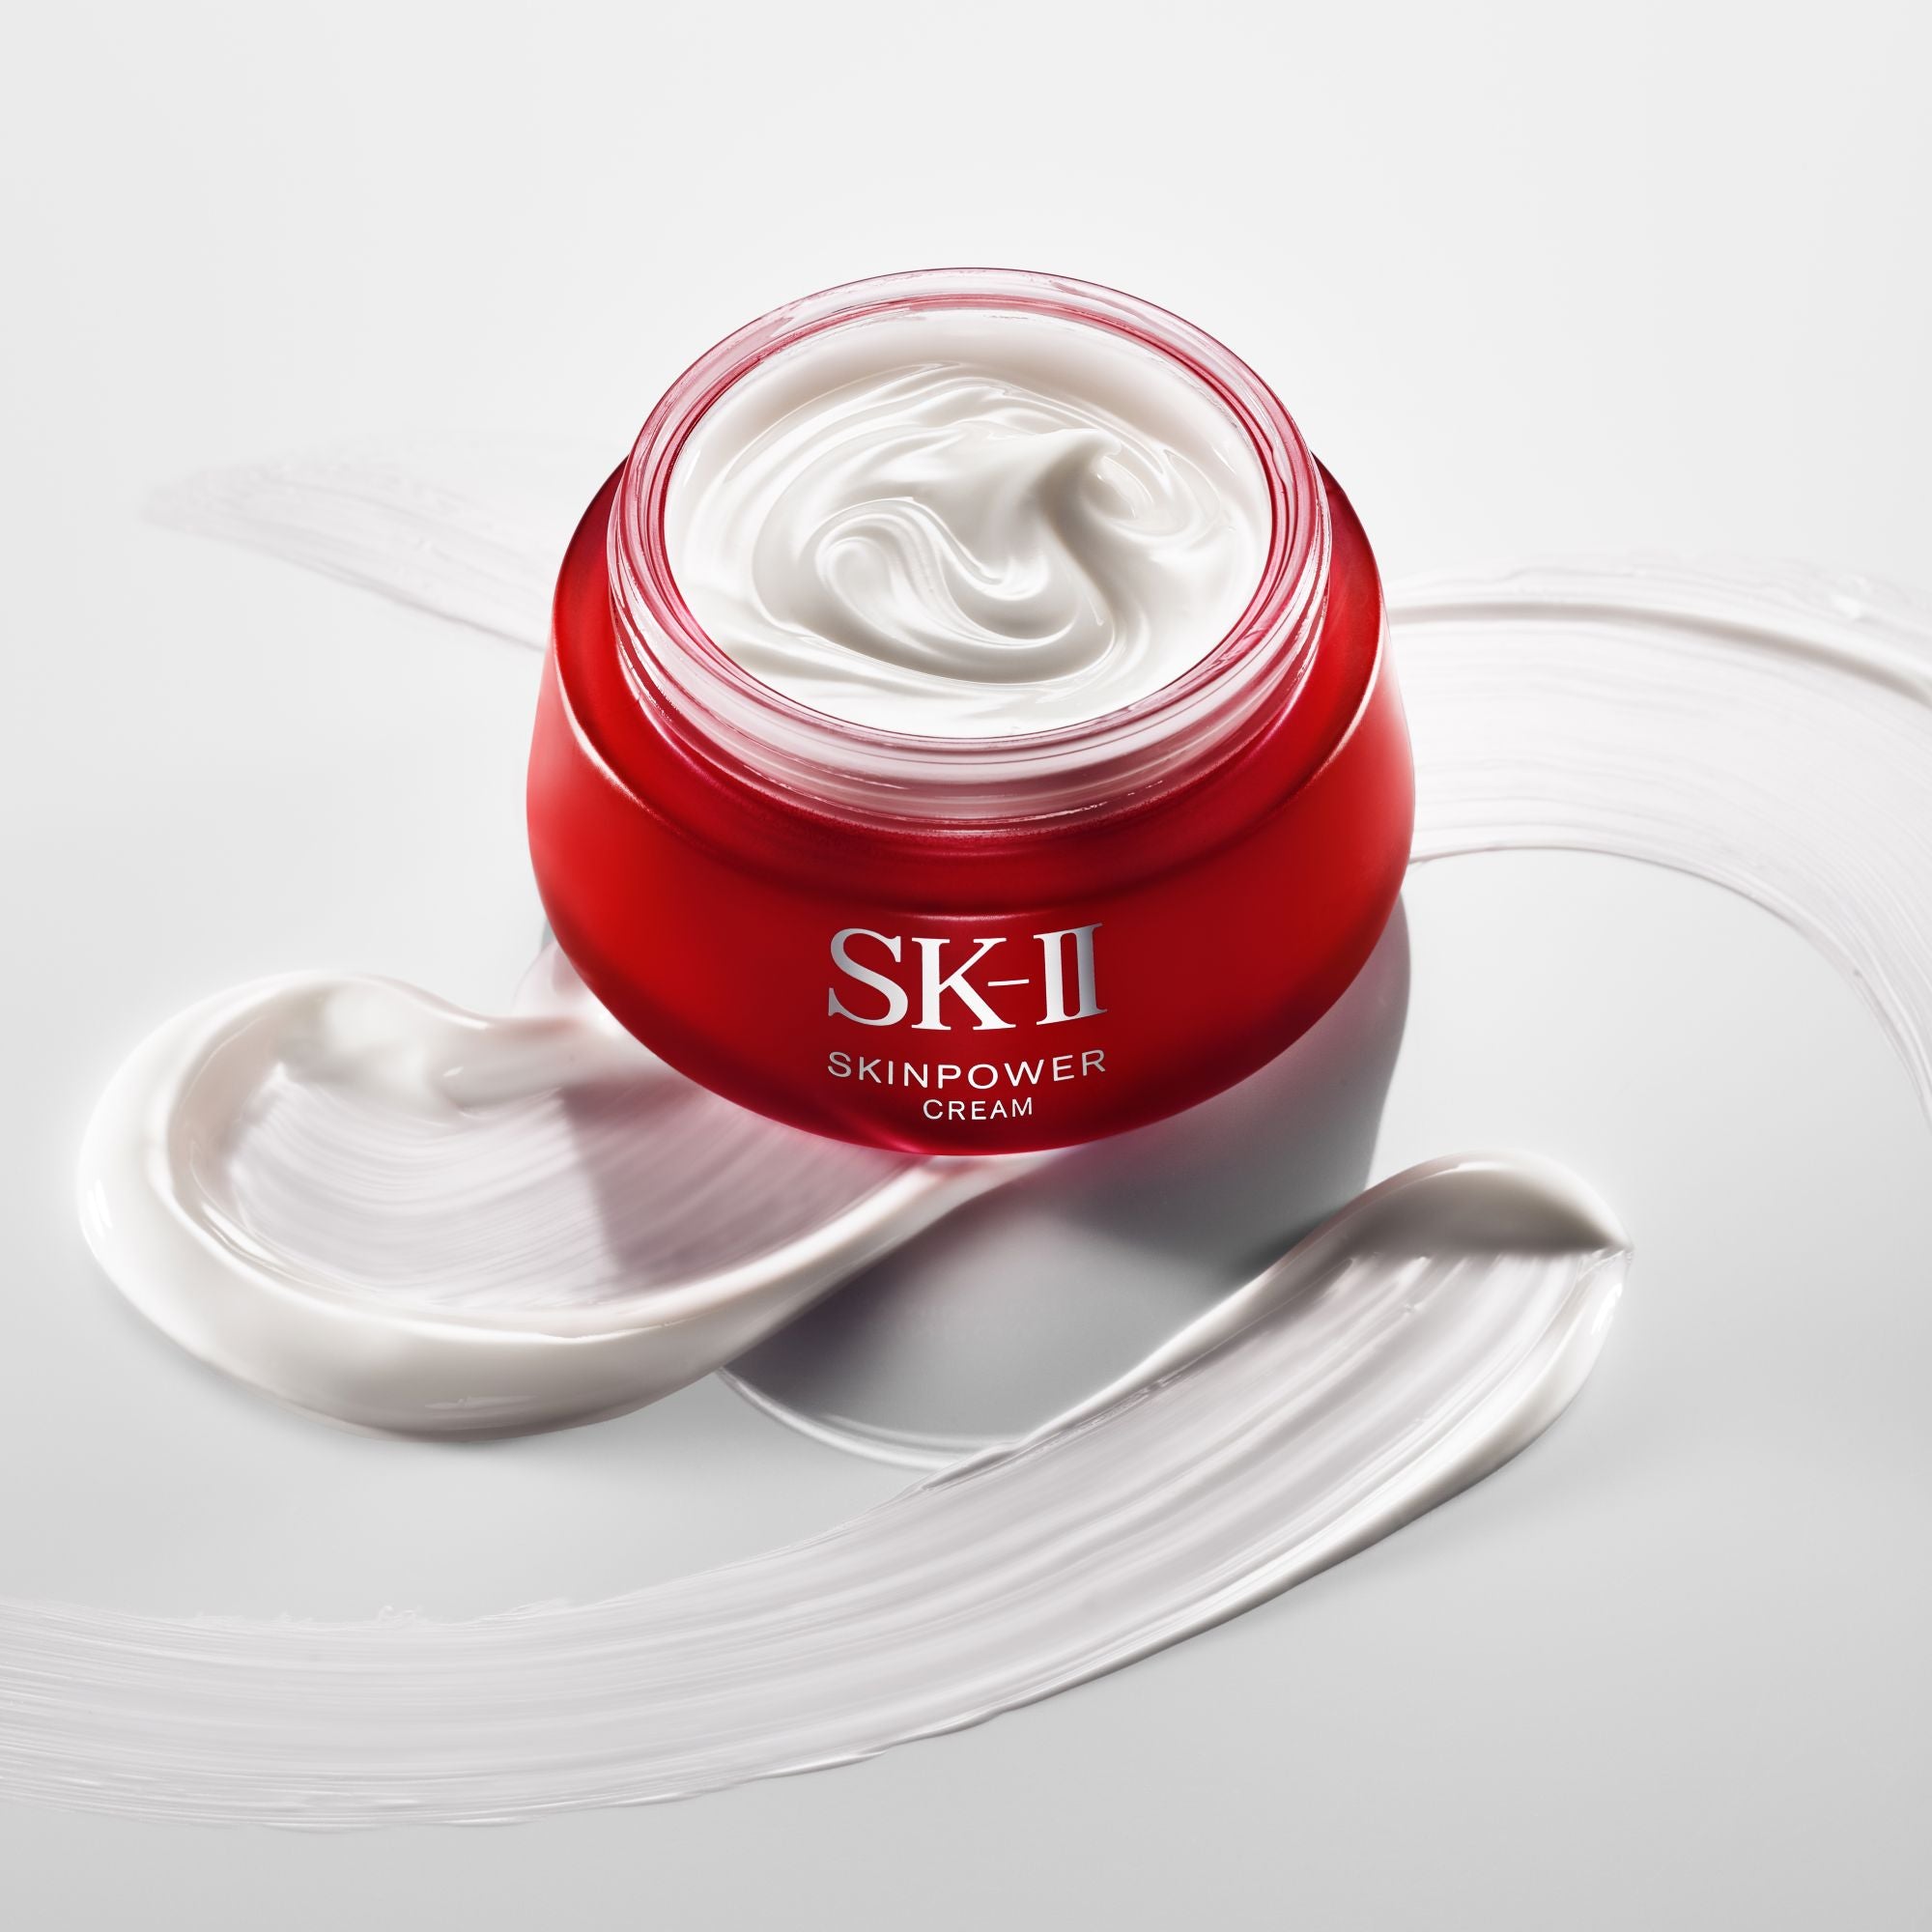 SK-II SKINPOWER Cream